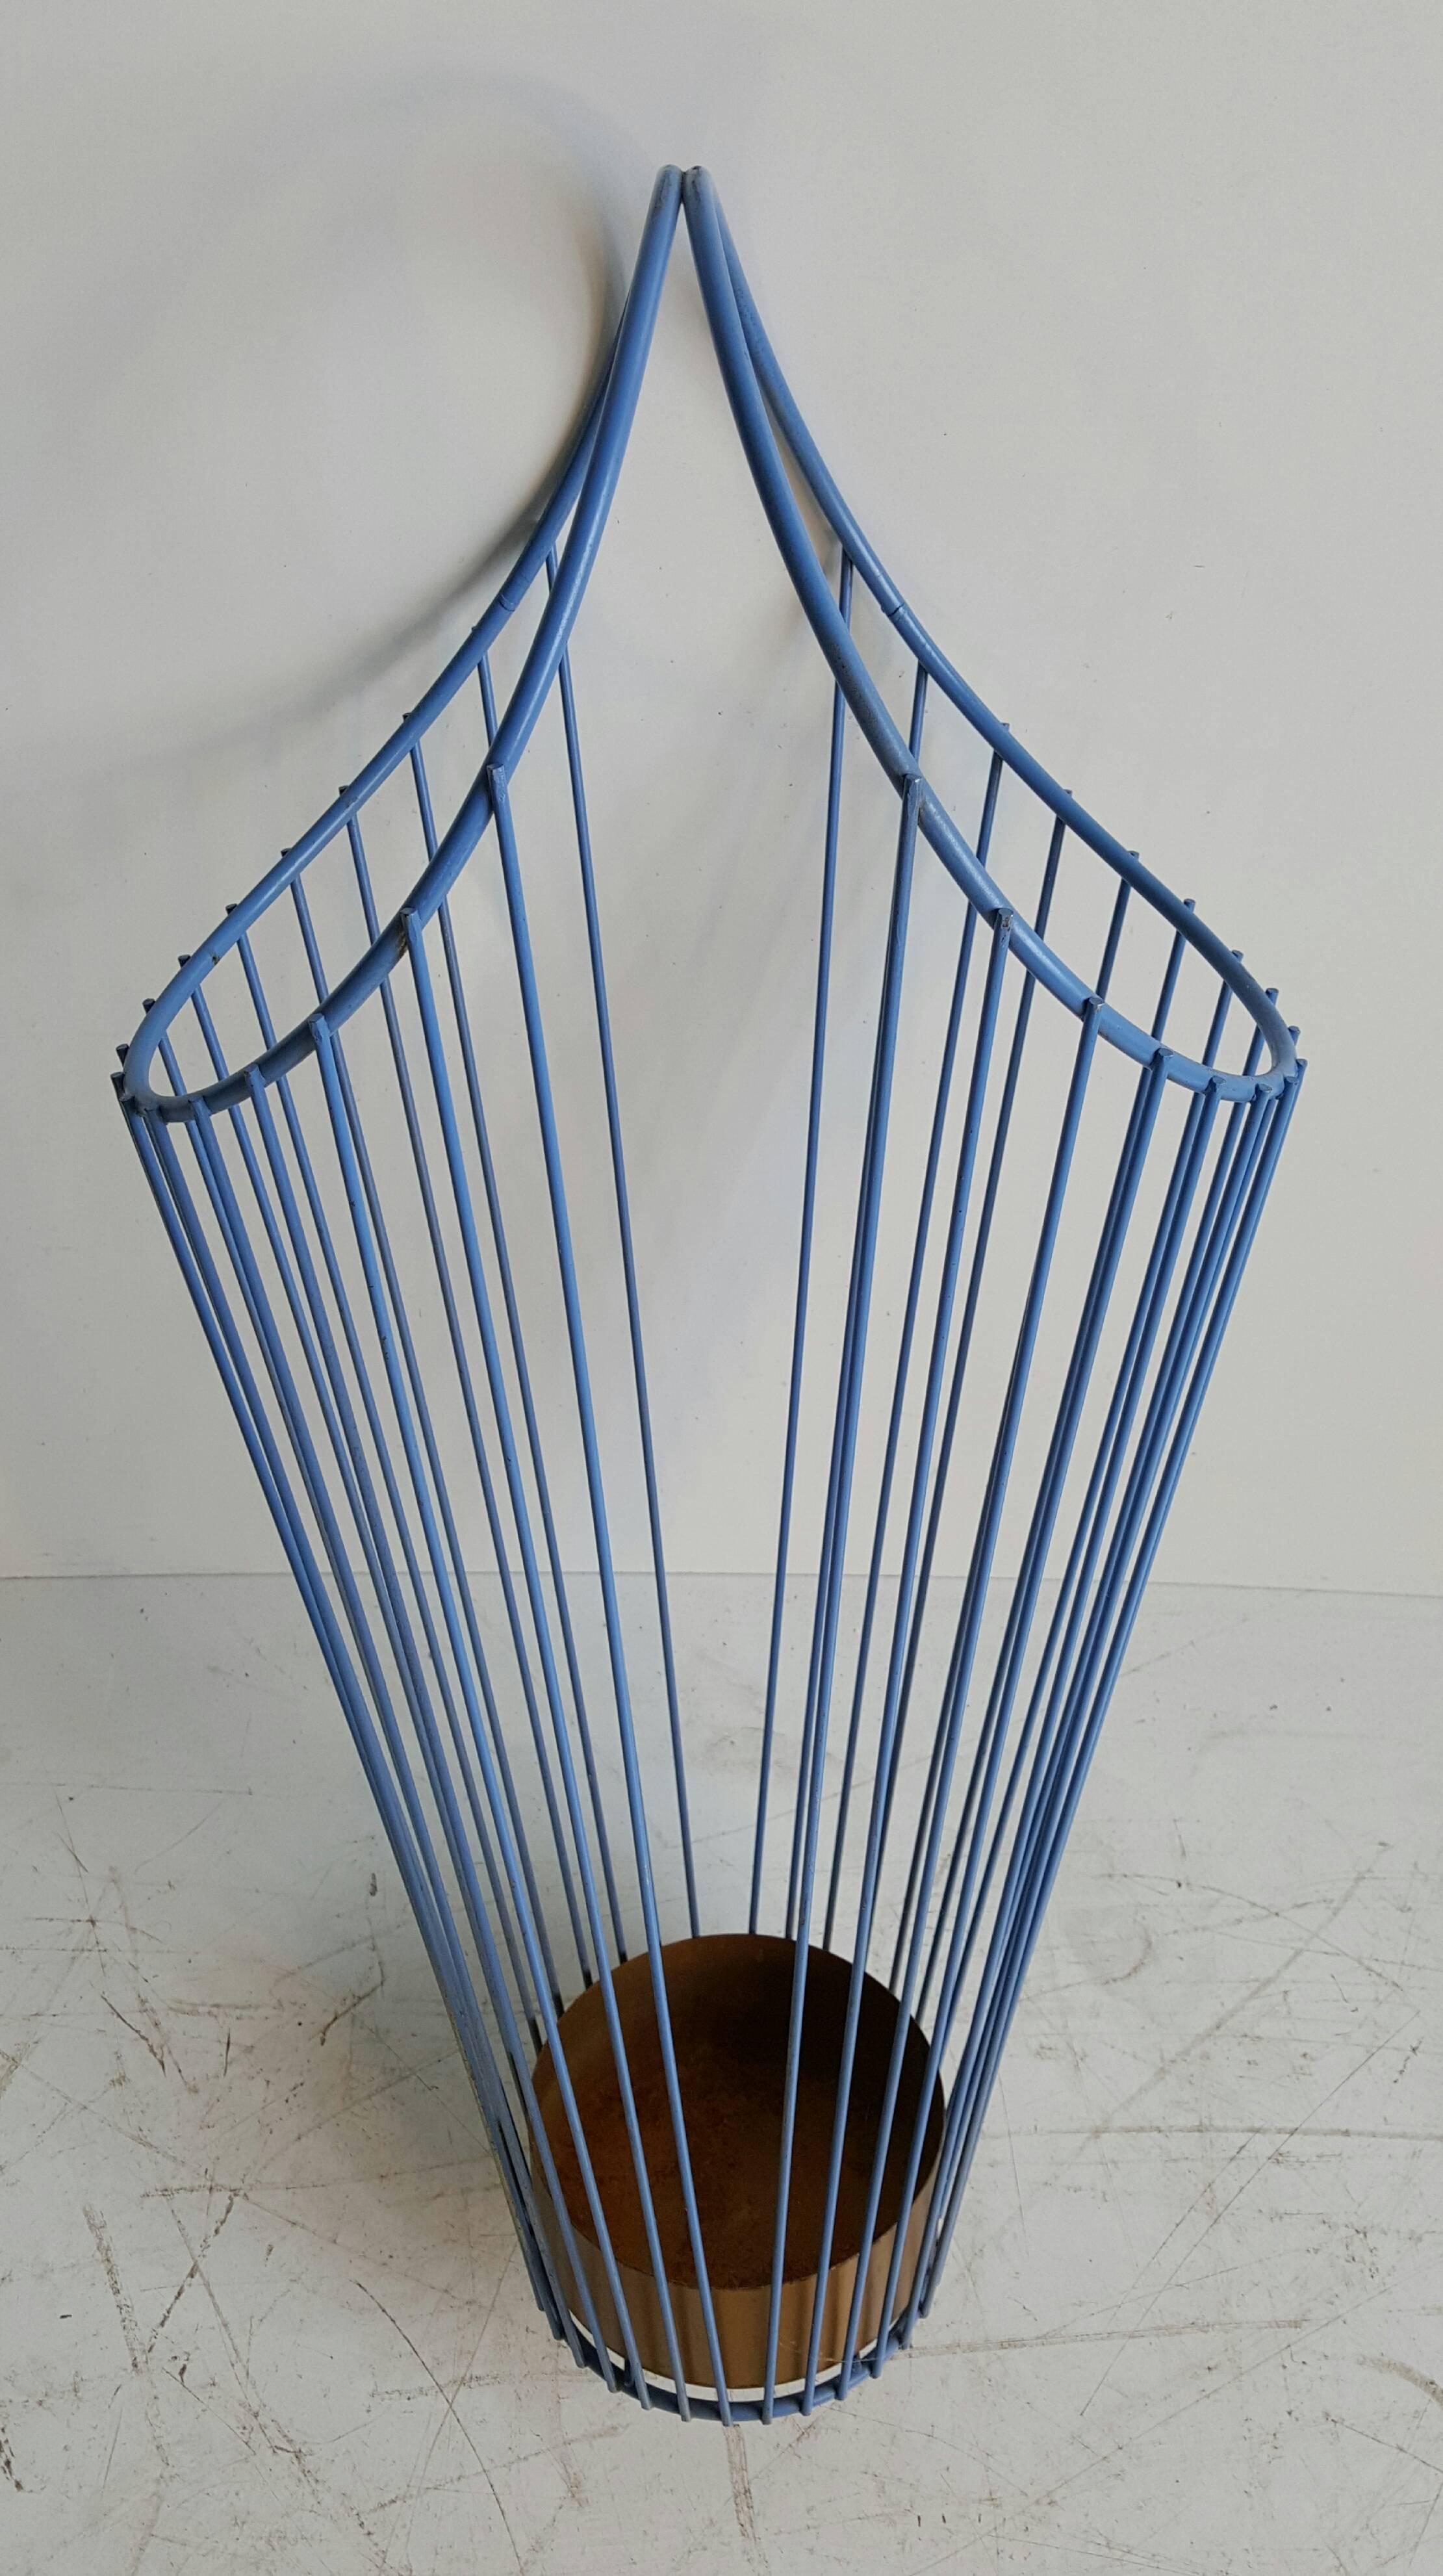 Charming modernist wire iron umbrella stand, painted periwinkle blue, great little object. Utilitarian sculpture. Retains original copper/brass insert in the manner of Mathieu Matégot.